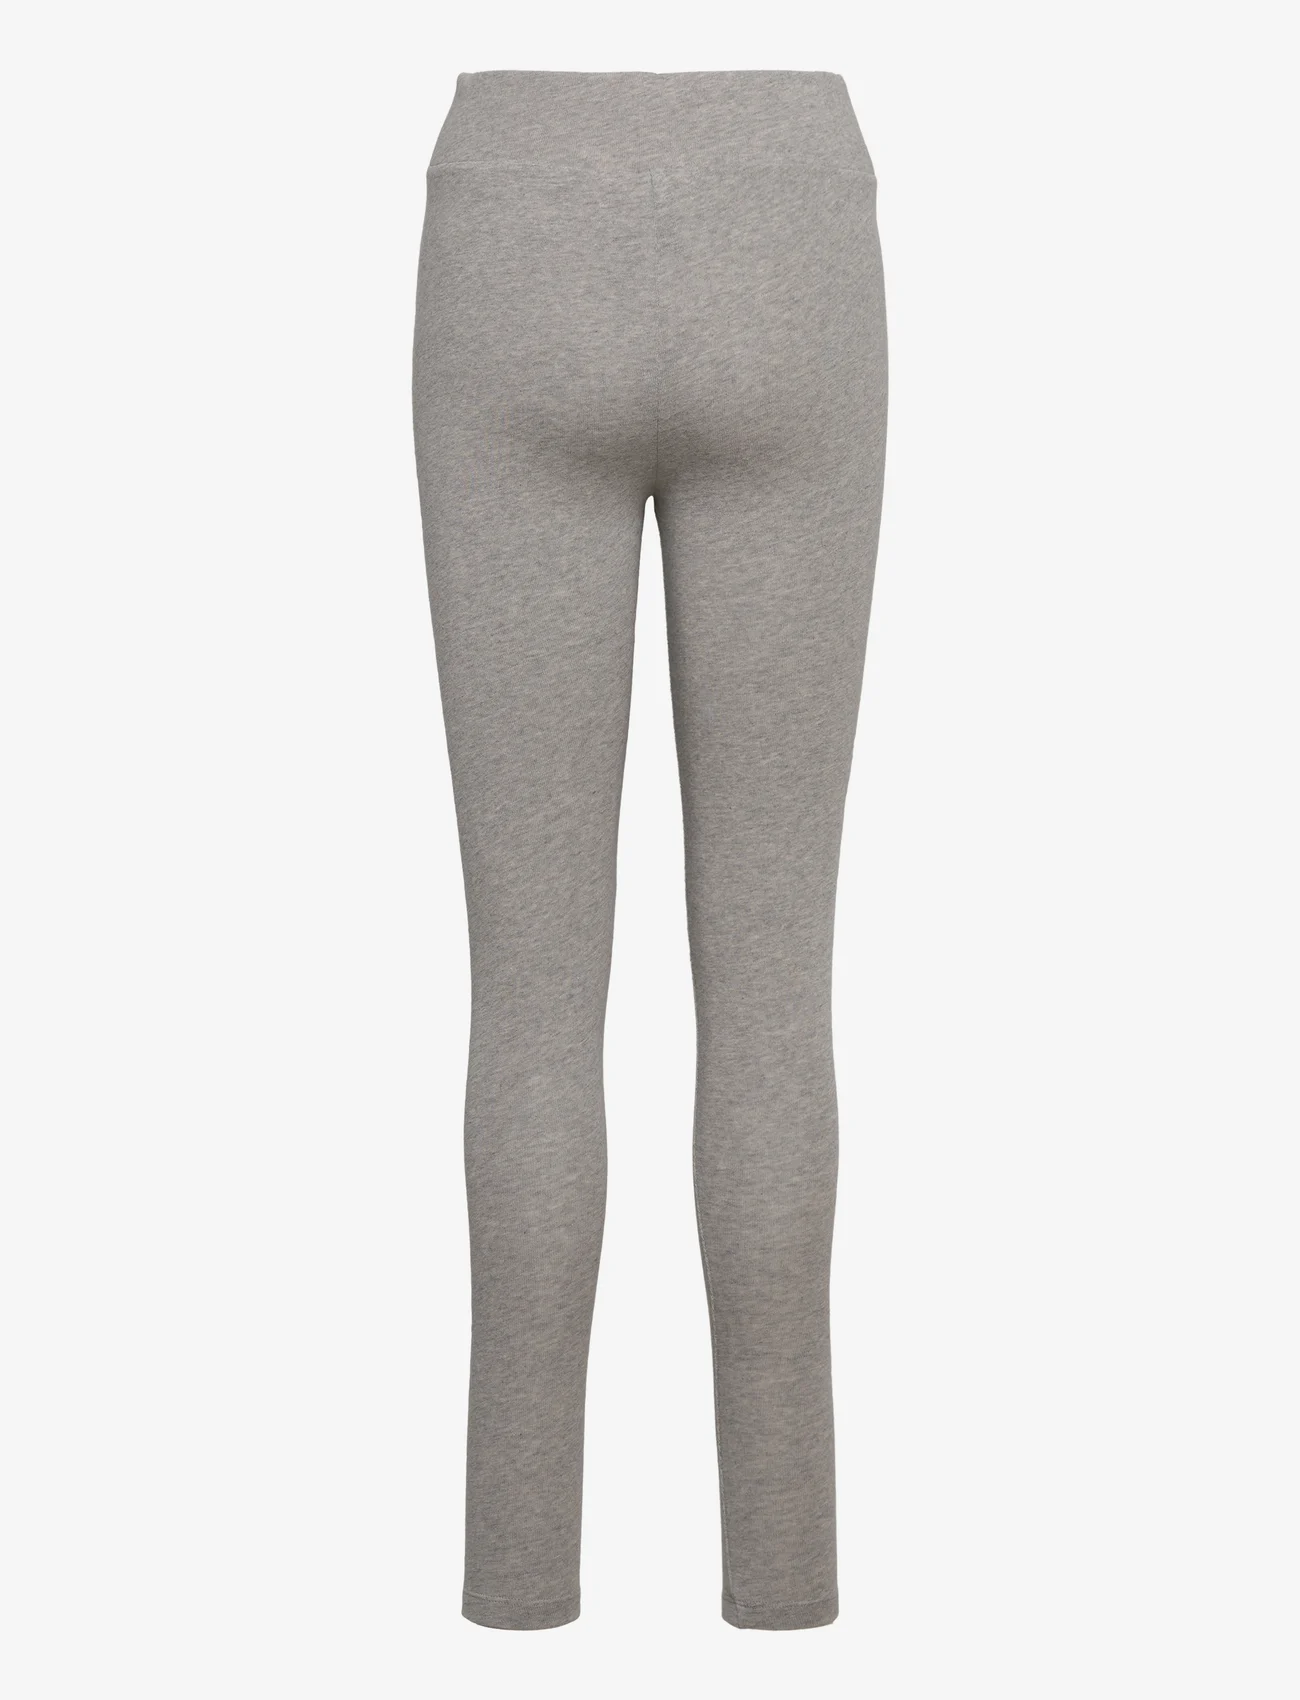 Basic Apparel - Anni soft leggings GOTS - timpės - grey mel. - 1